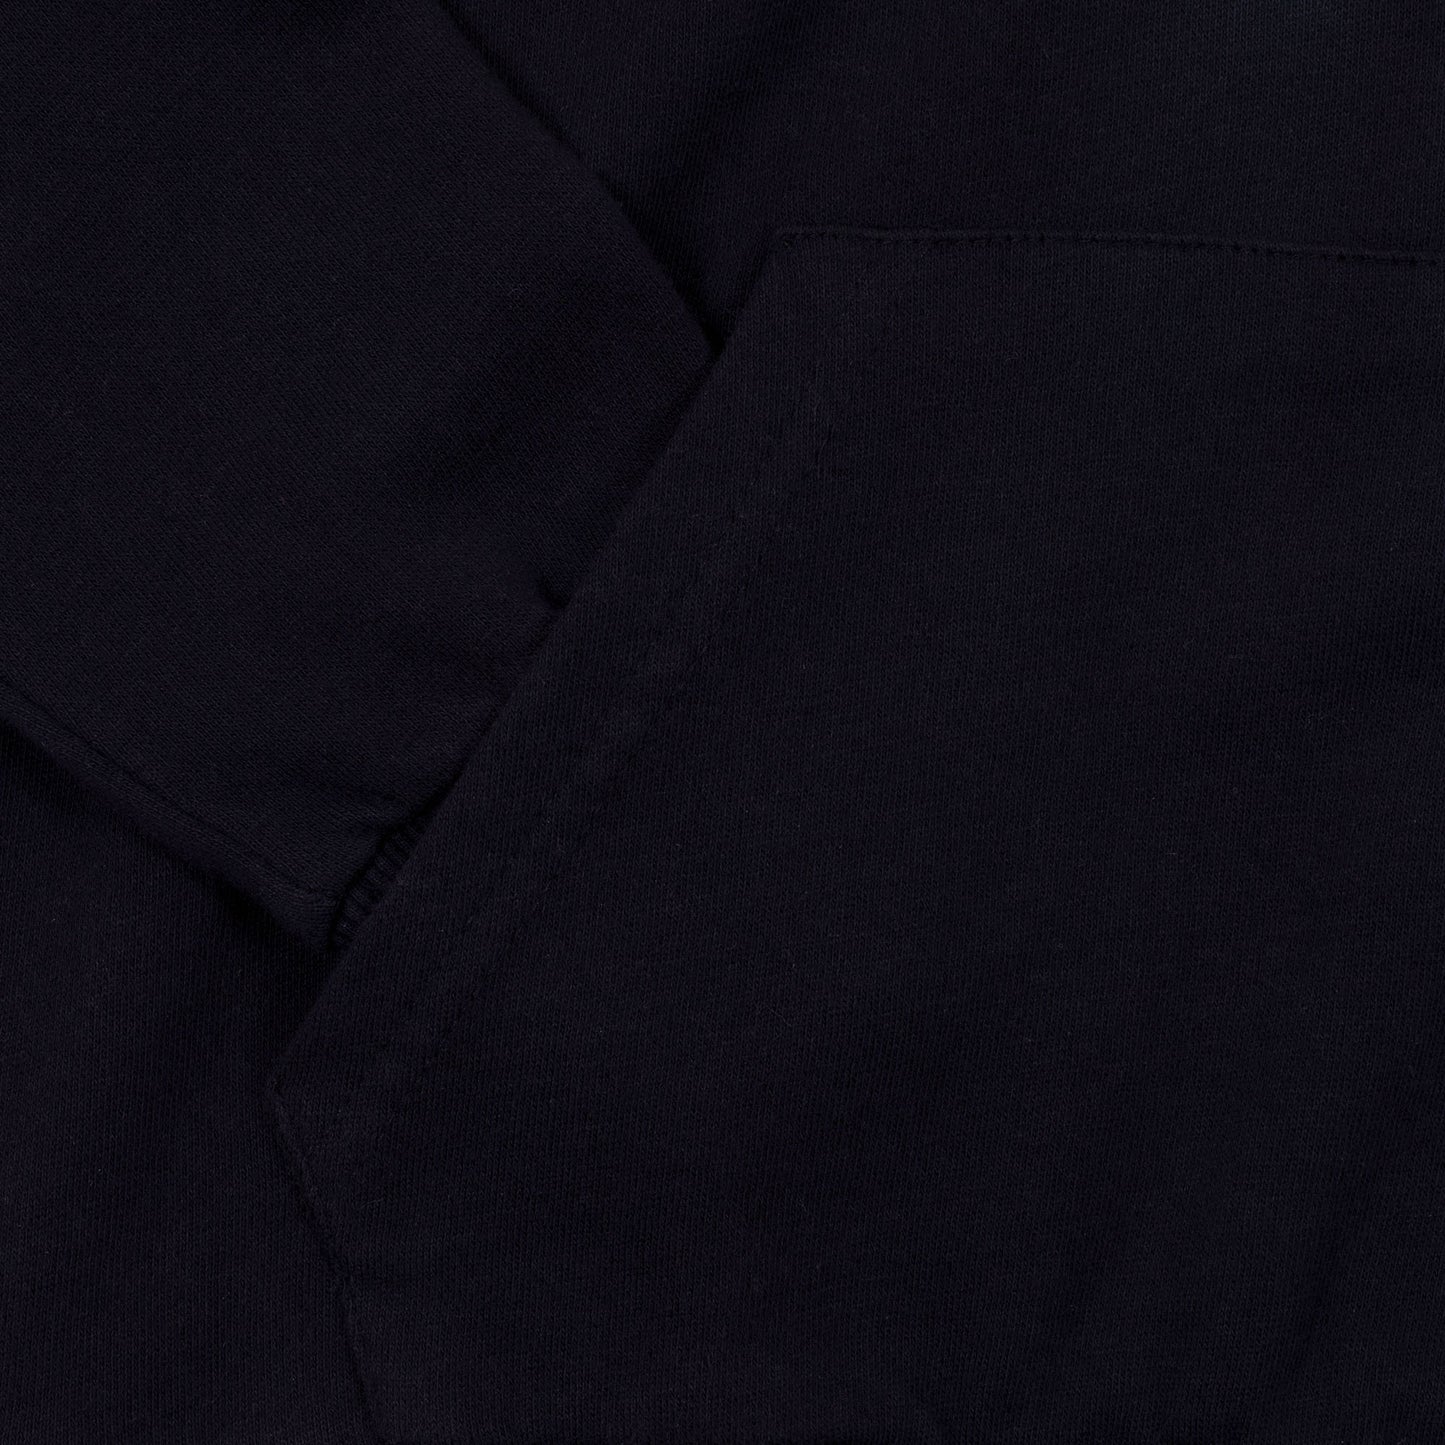 Paw Print Black & White Tie-Dye Hooded Sweatshirt